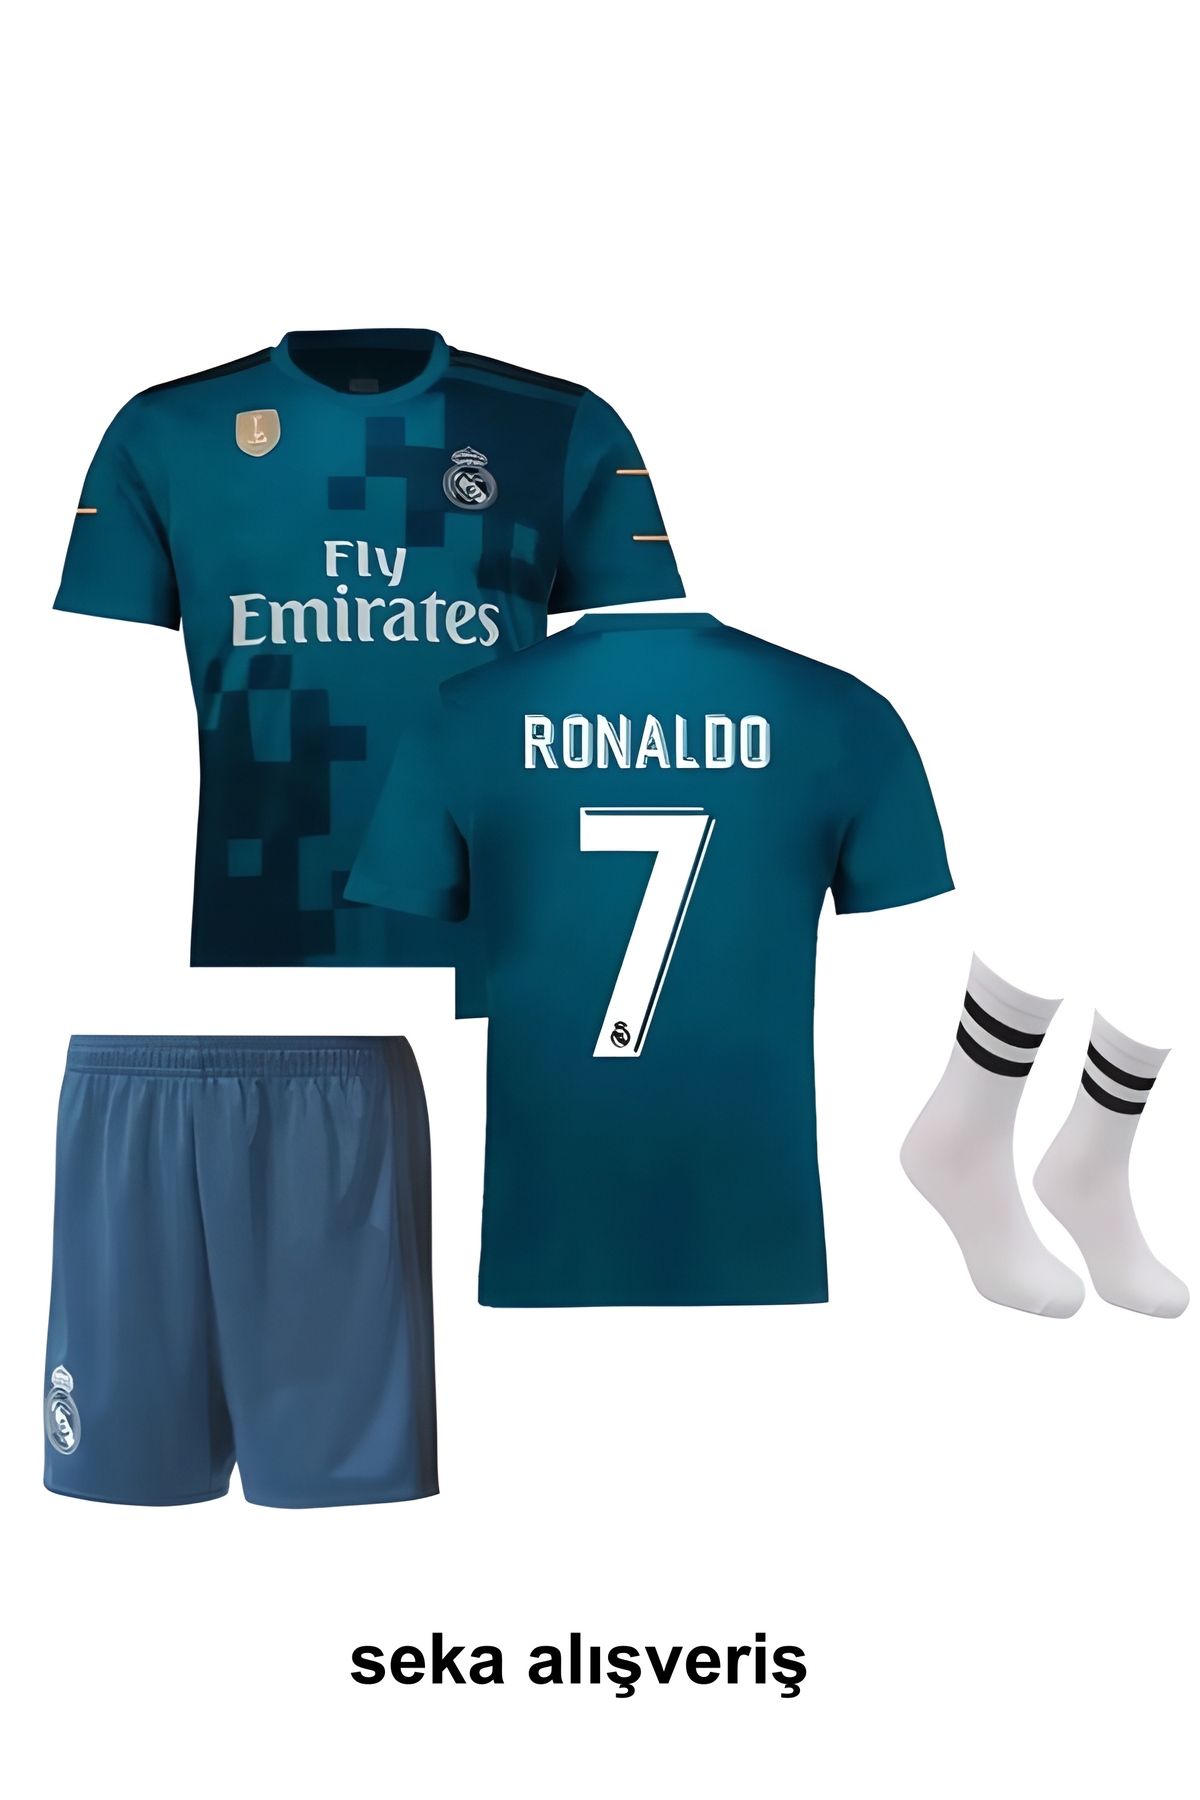 Seka Alışveriş Ronaldo Mavi-turkuaz 7 Real Madrid 2018 Deplasman 3'lü Çoçuk Forma Seti